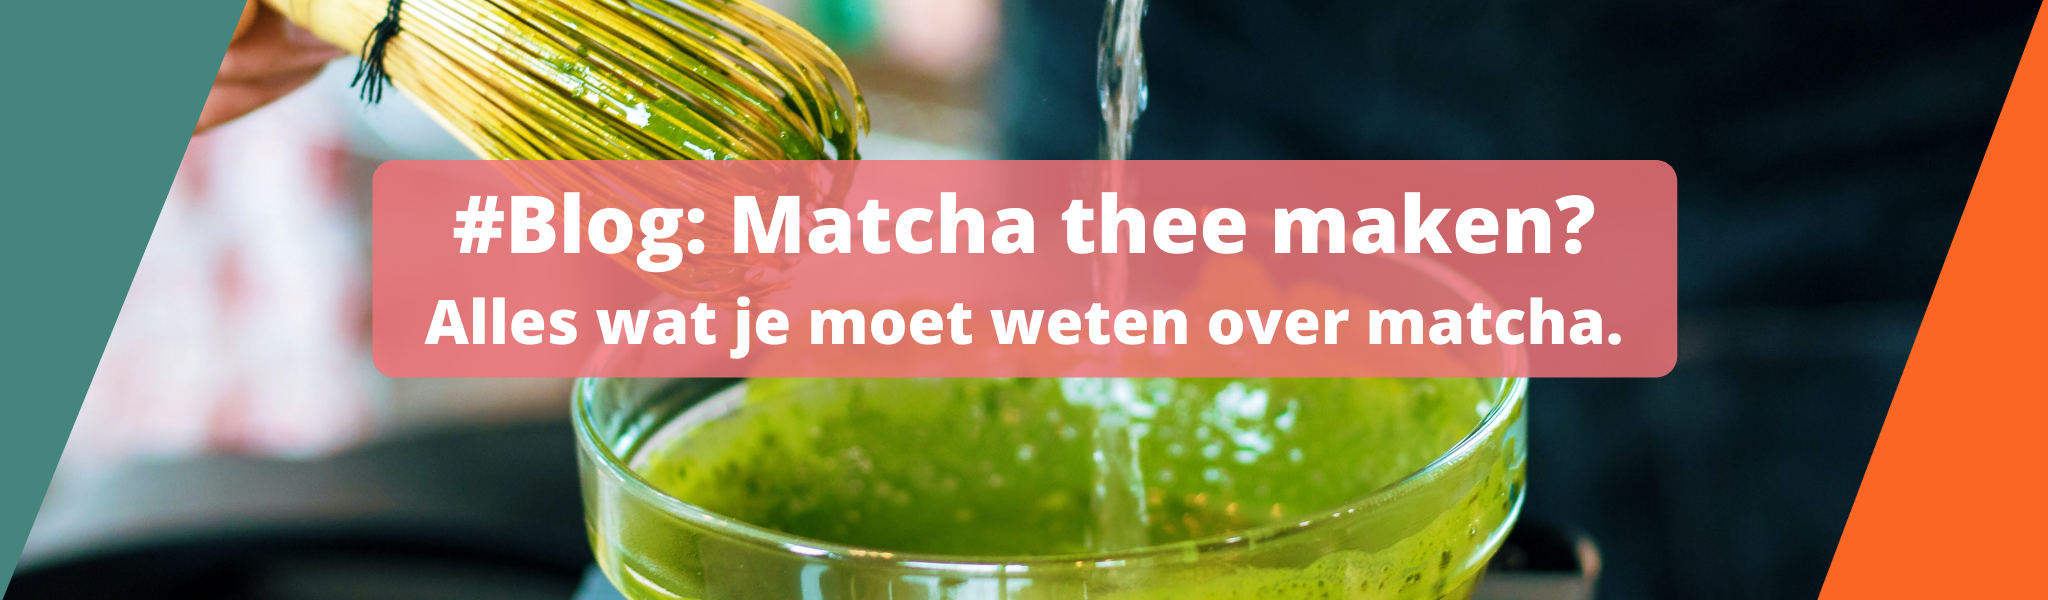 Blog: Matcha thee maken? Lees hier alles over matcha.